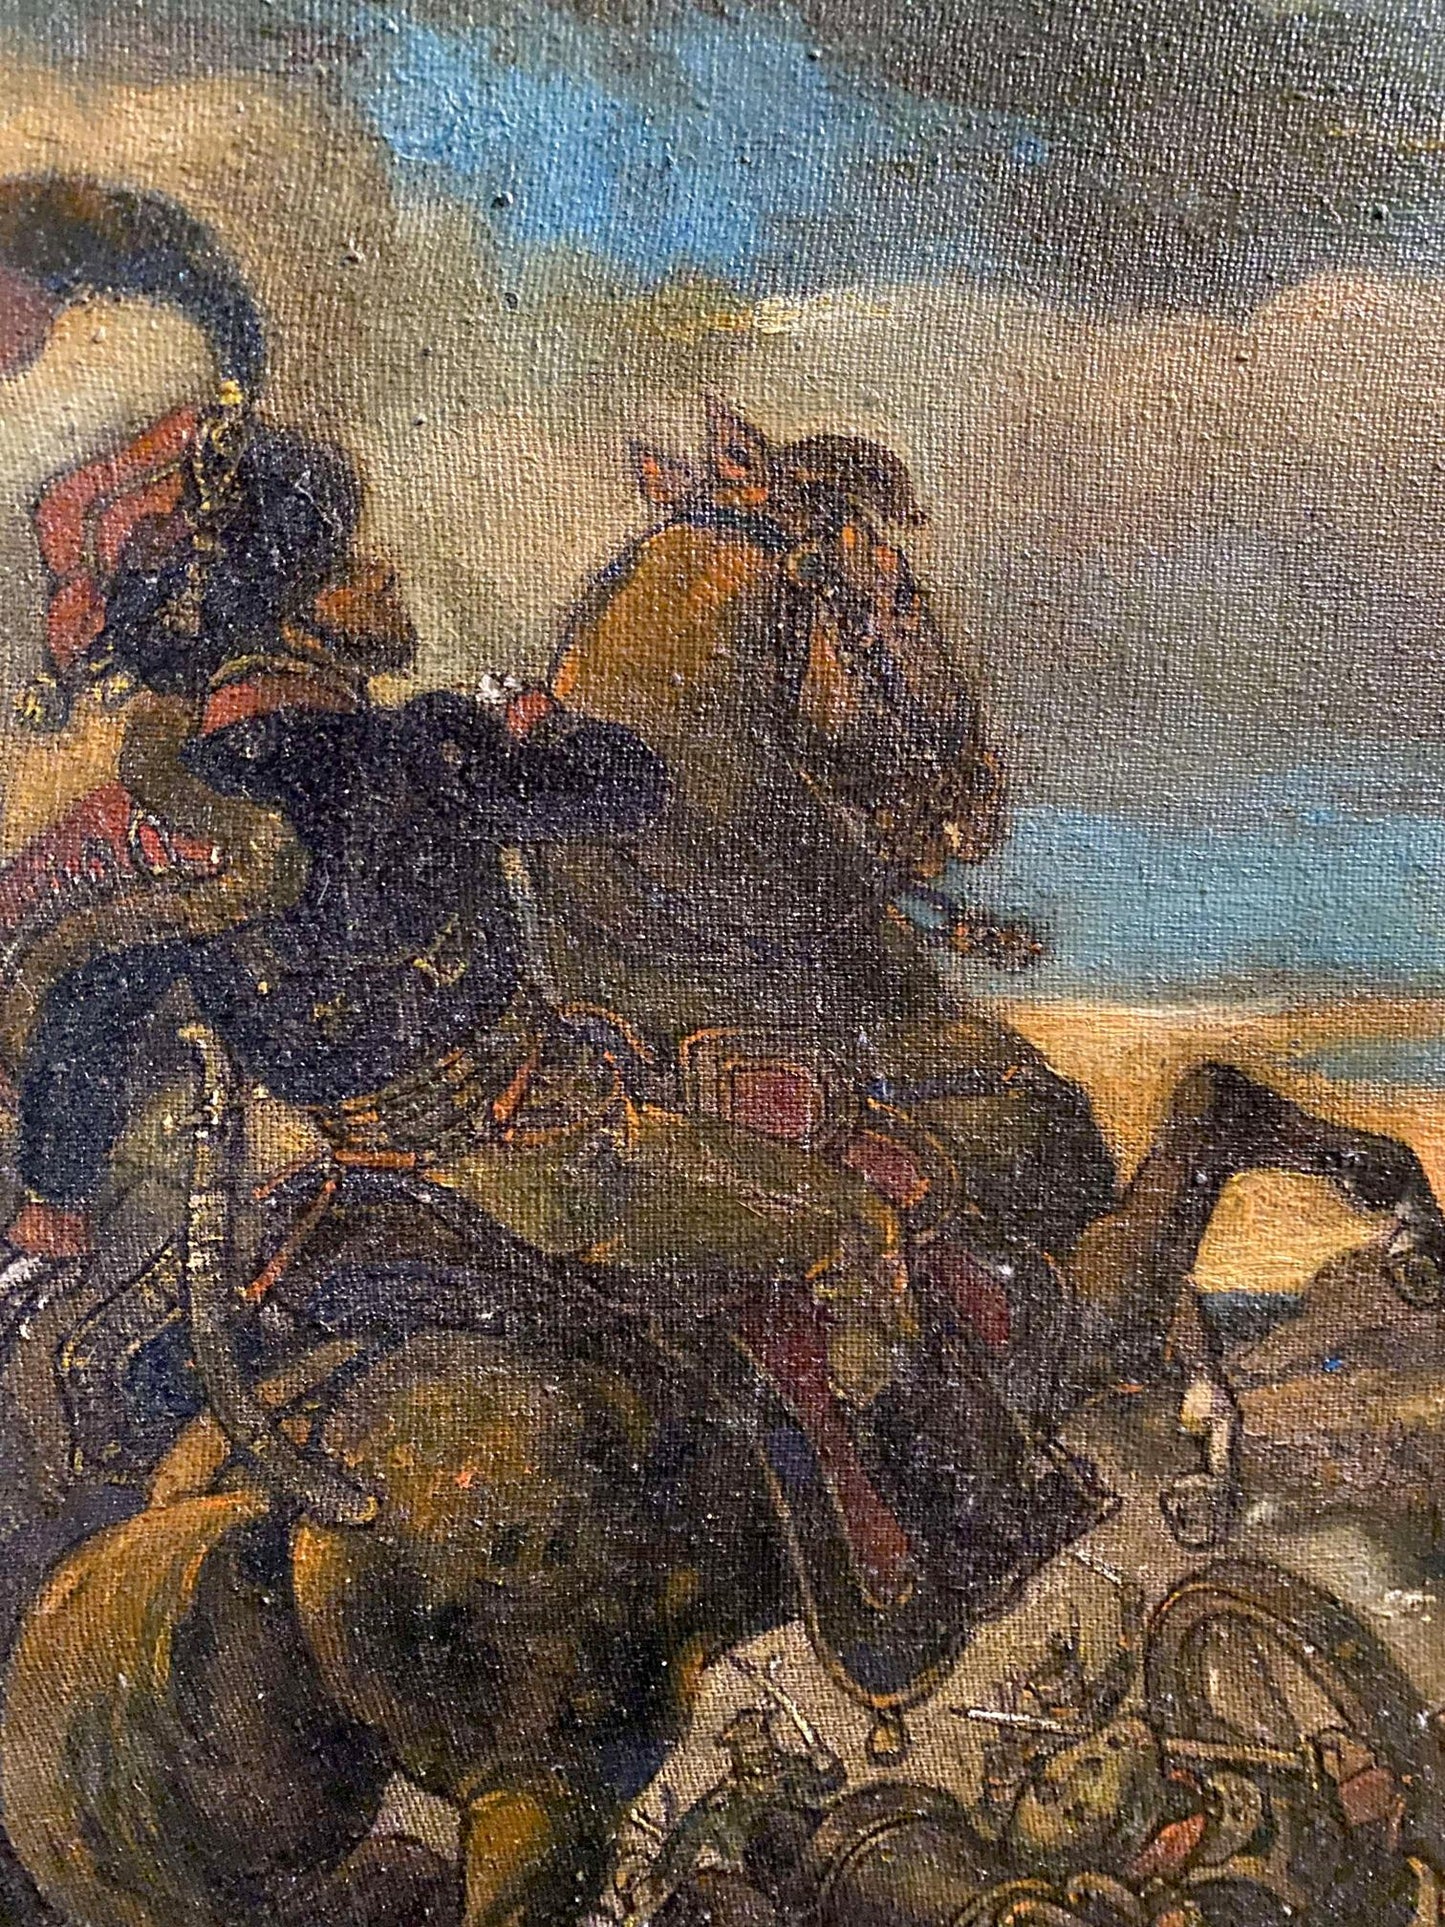 The grandeur of Napoleon and his army is depicted in Oleg Litvinov's oil painting